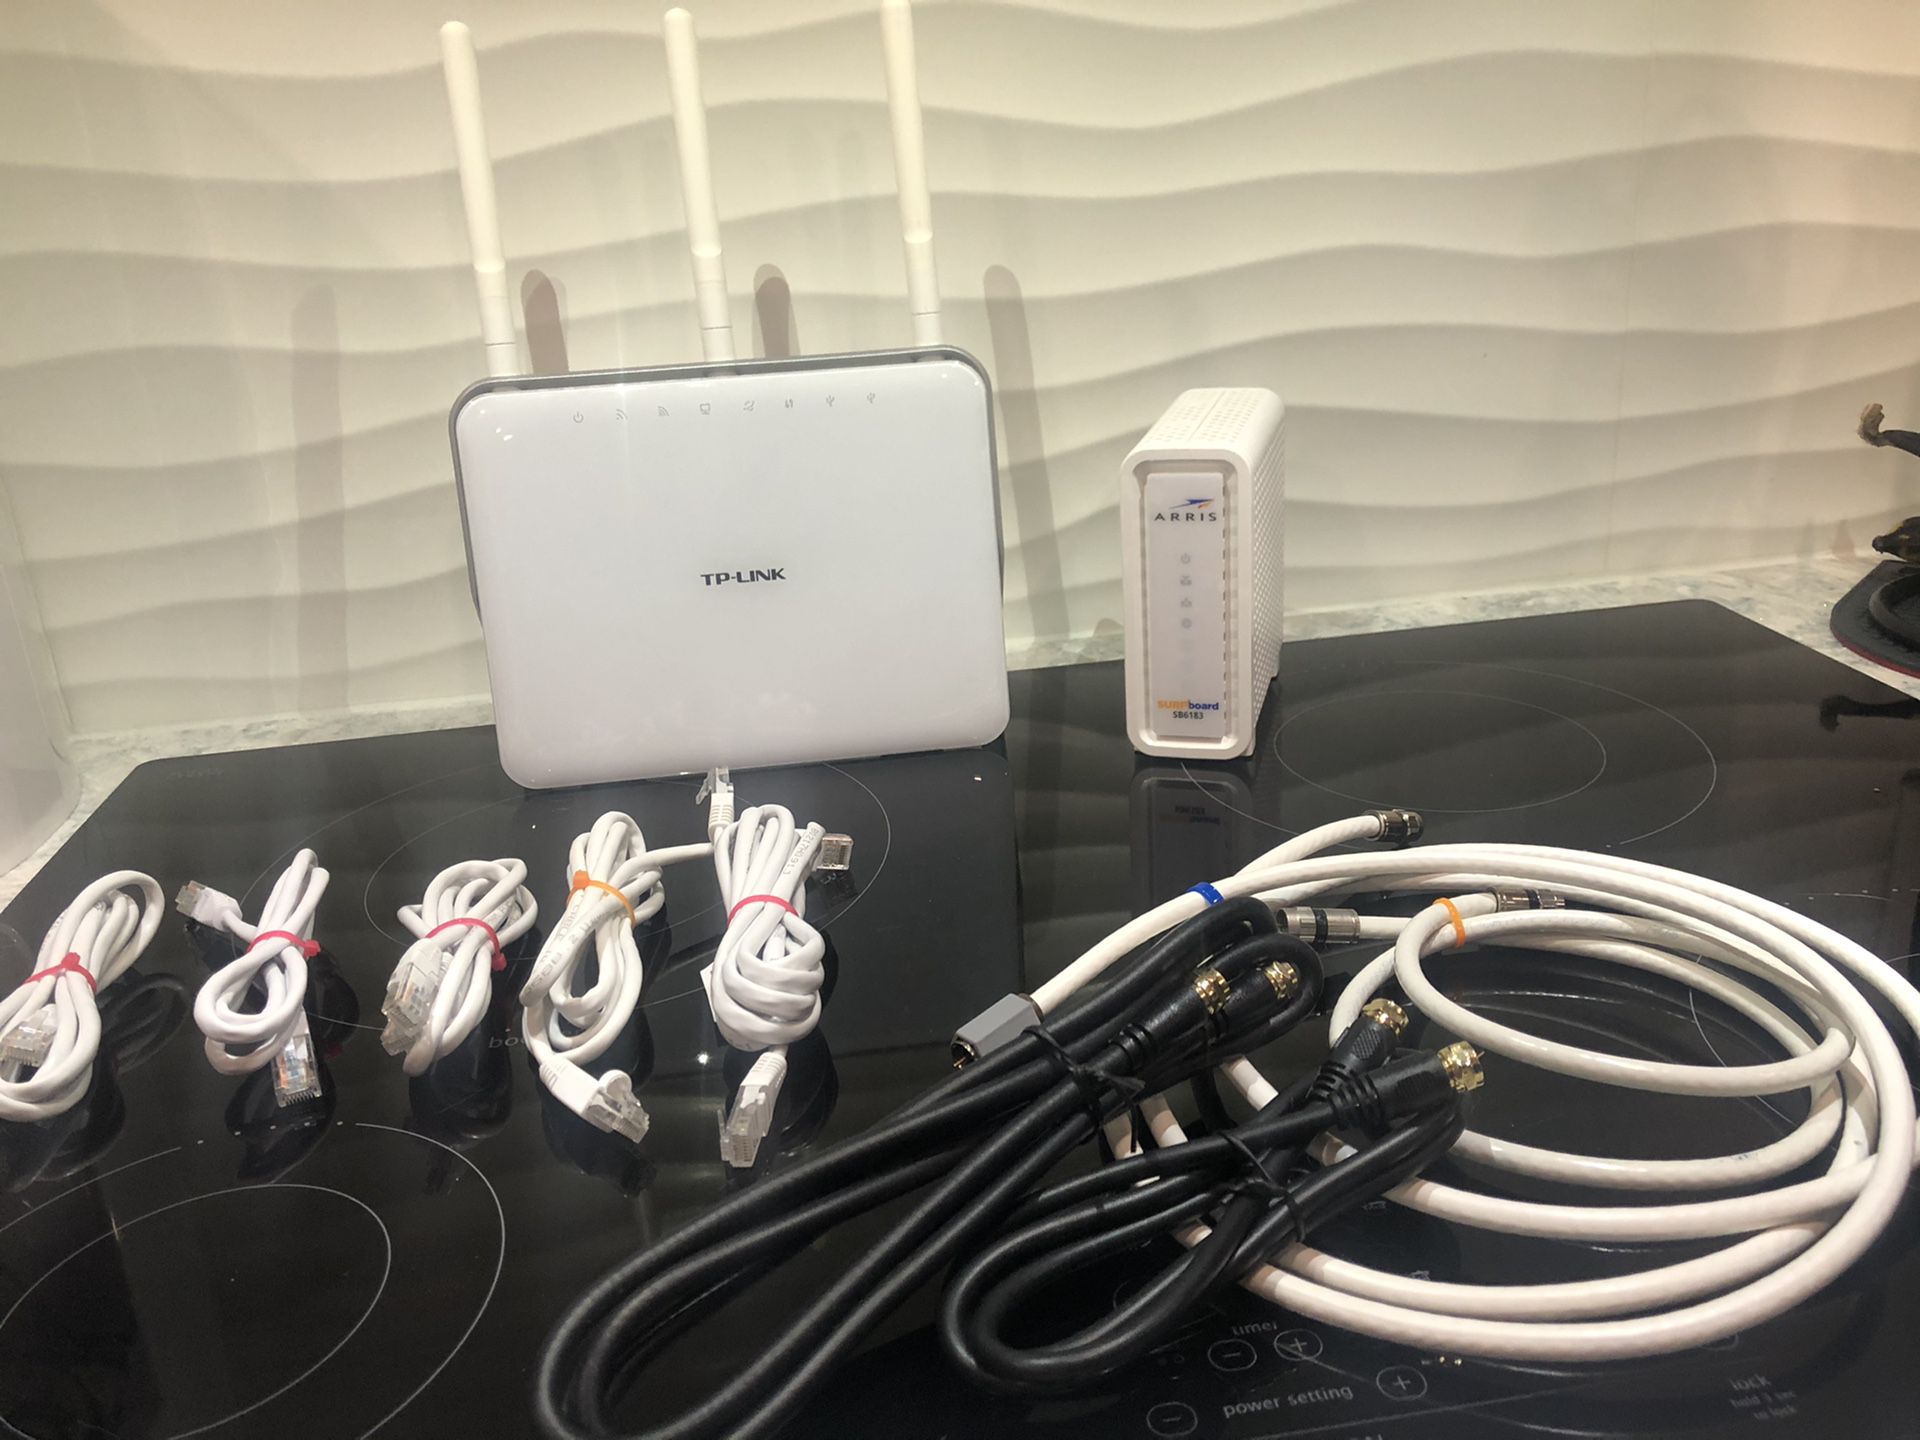 Cable Internet Bundle - Modem & Wireless Router